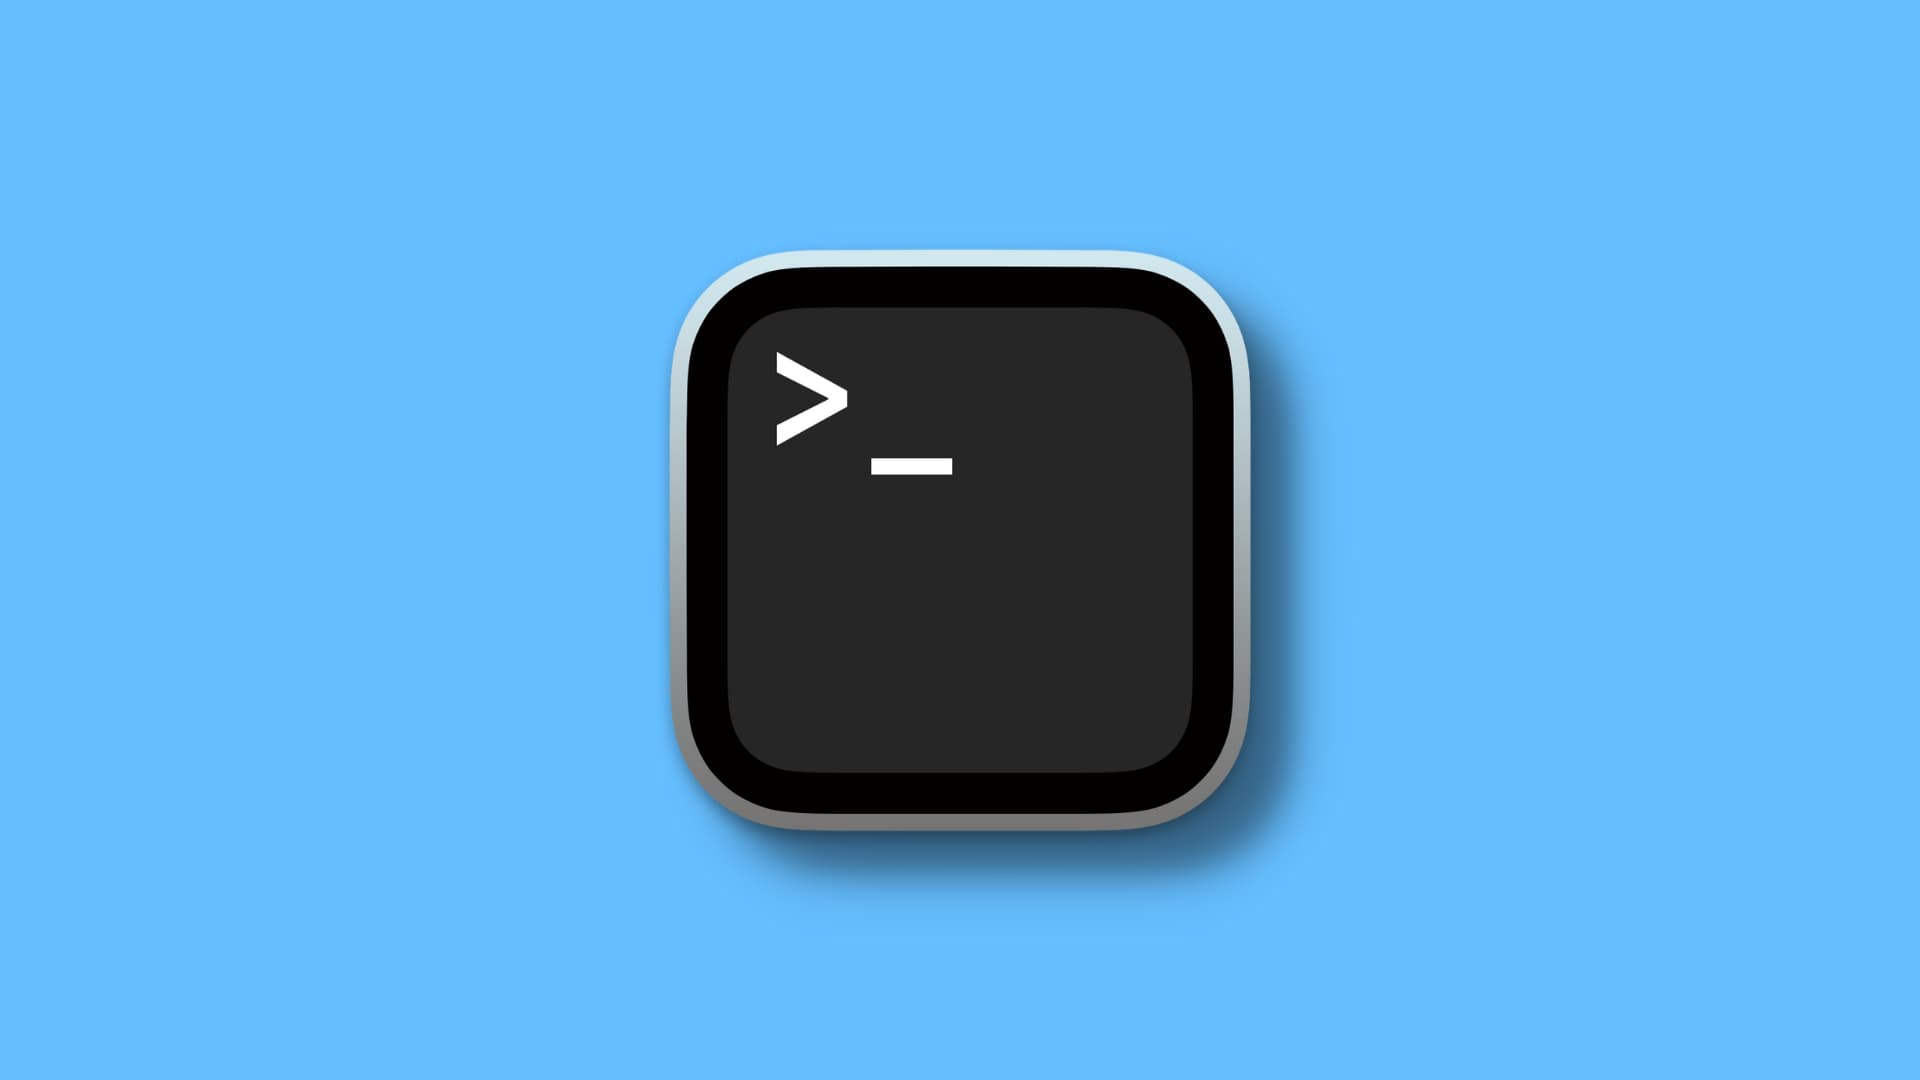 Mac's Terminal app icon